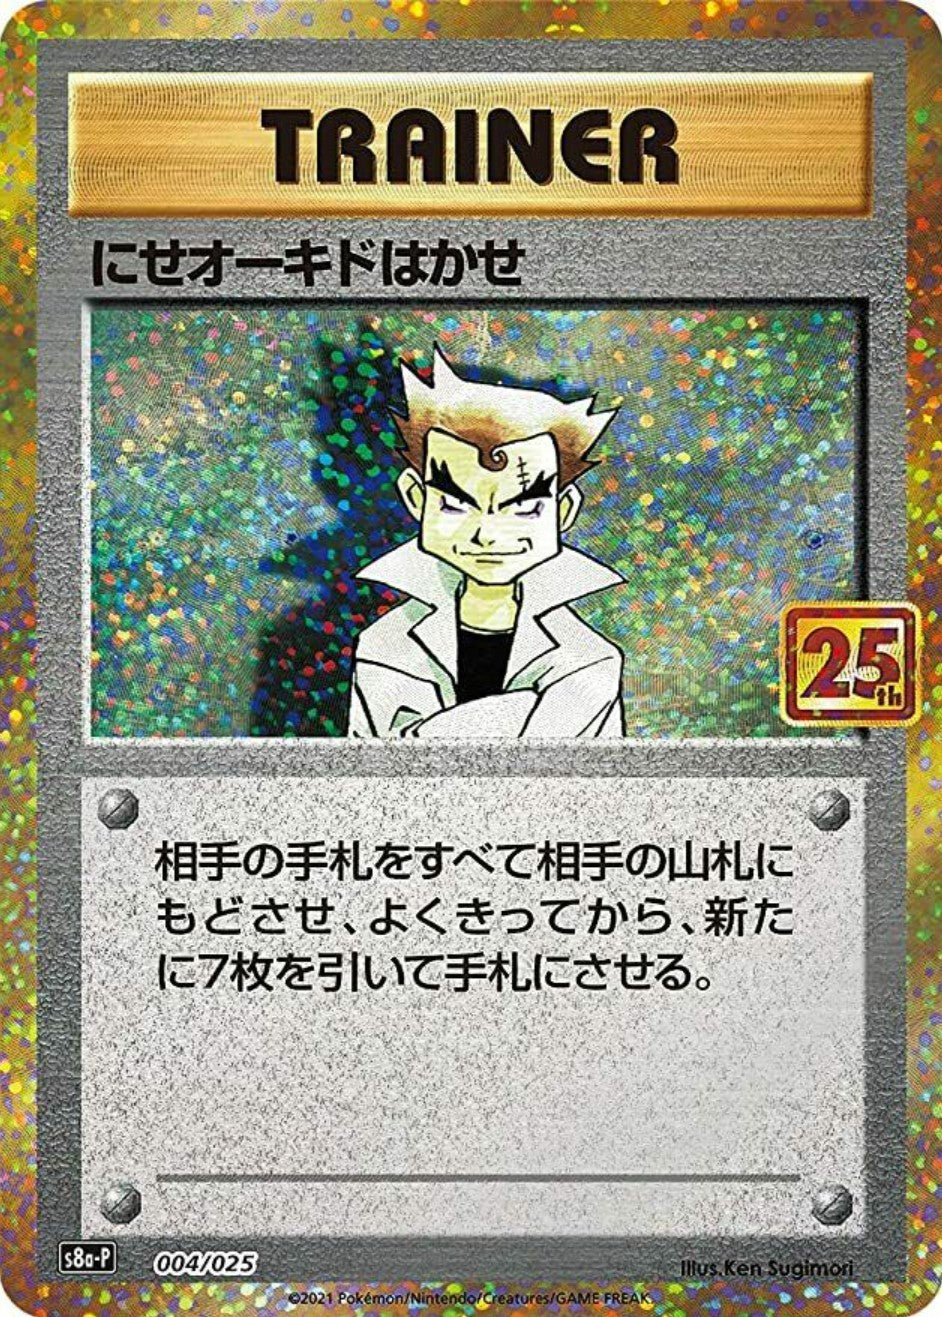 Garchomp C LV.X 018/025 S8a-P 25th ANNIVERSARY - Pokemon Card Japanese